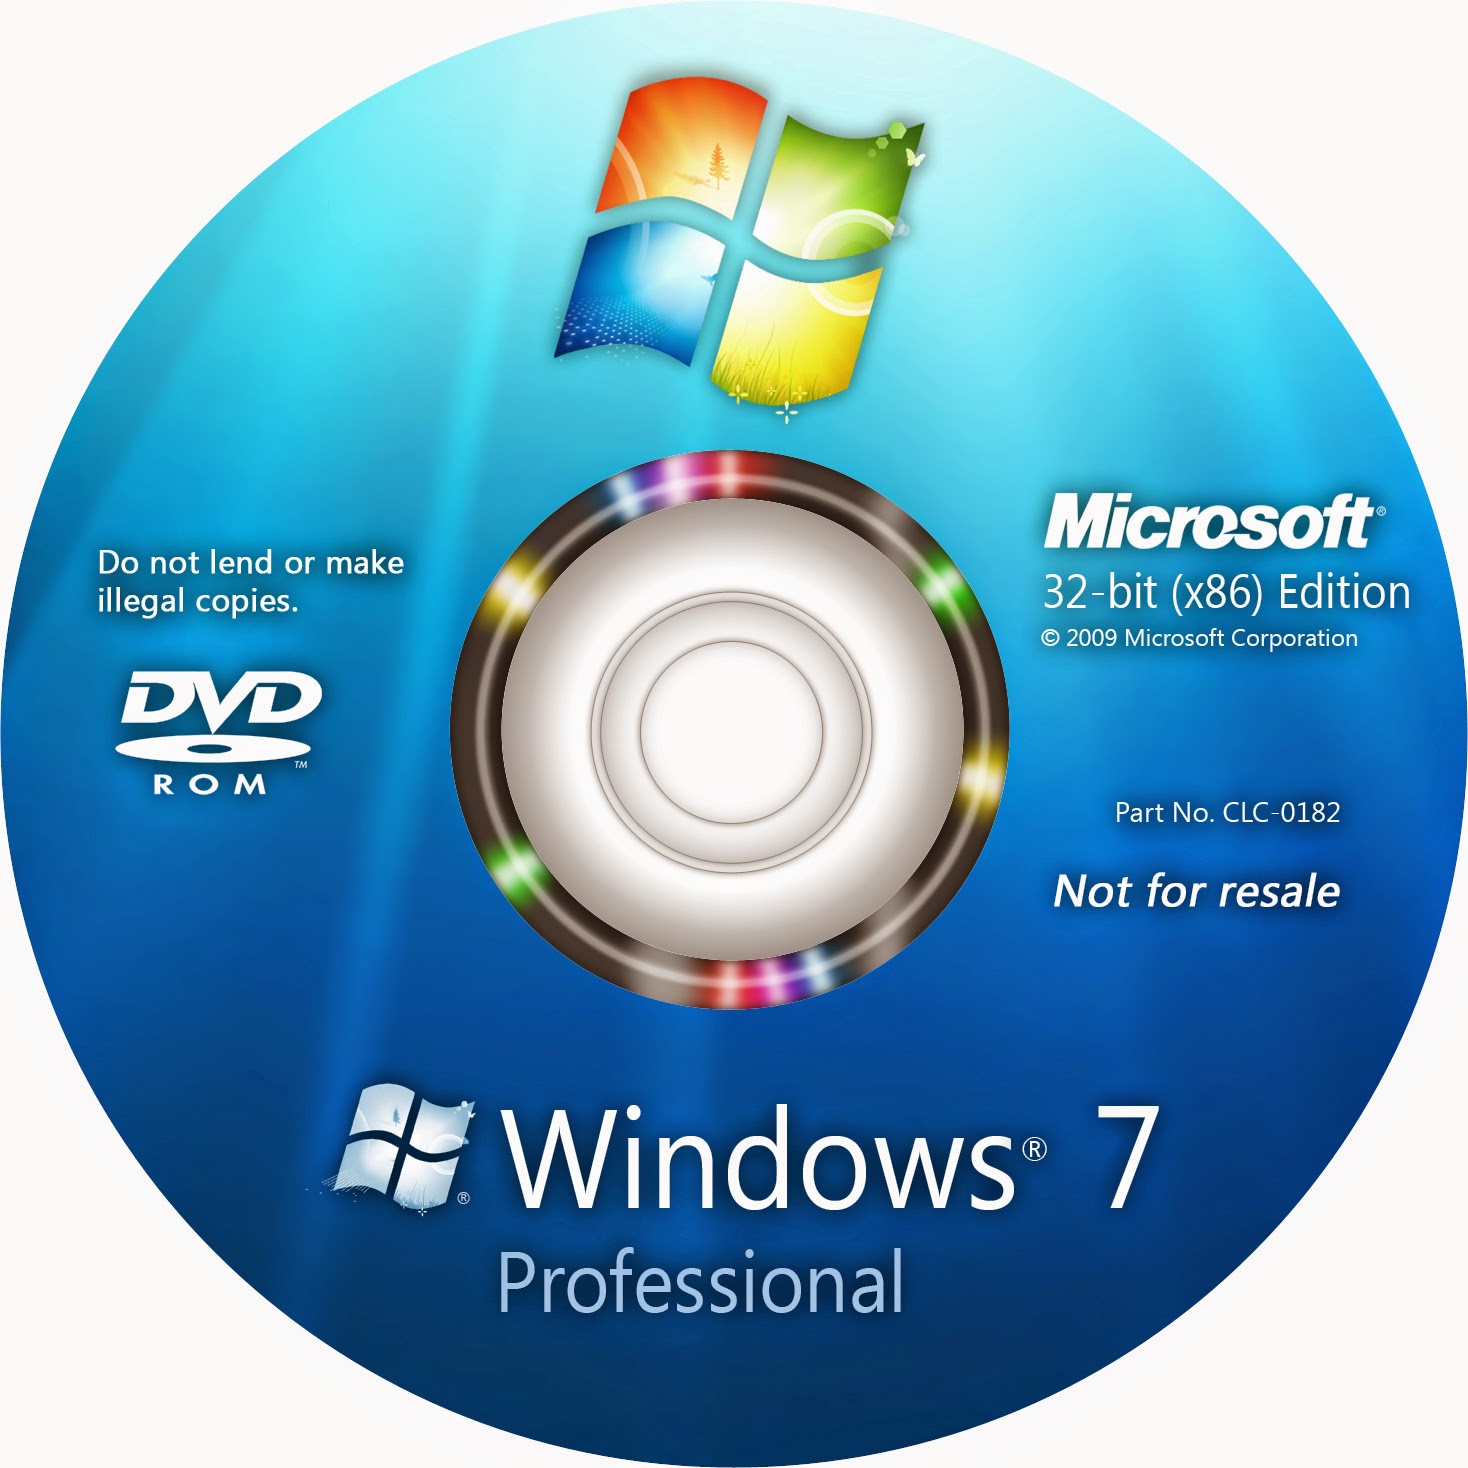 dvd player windows 7 64 bit free download